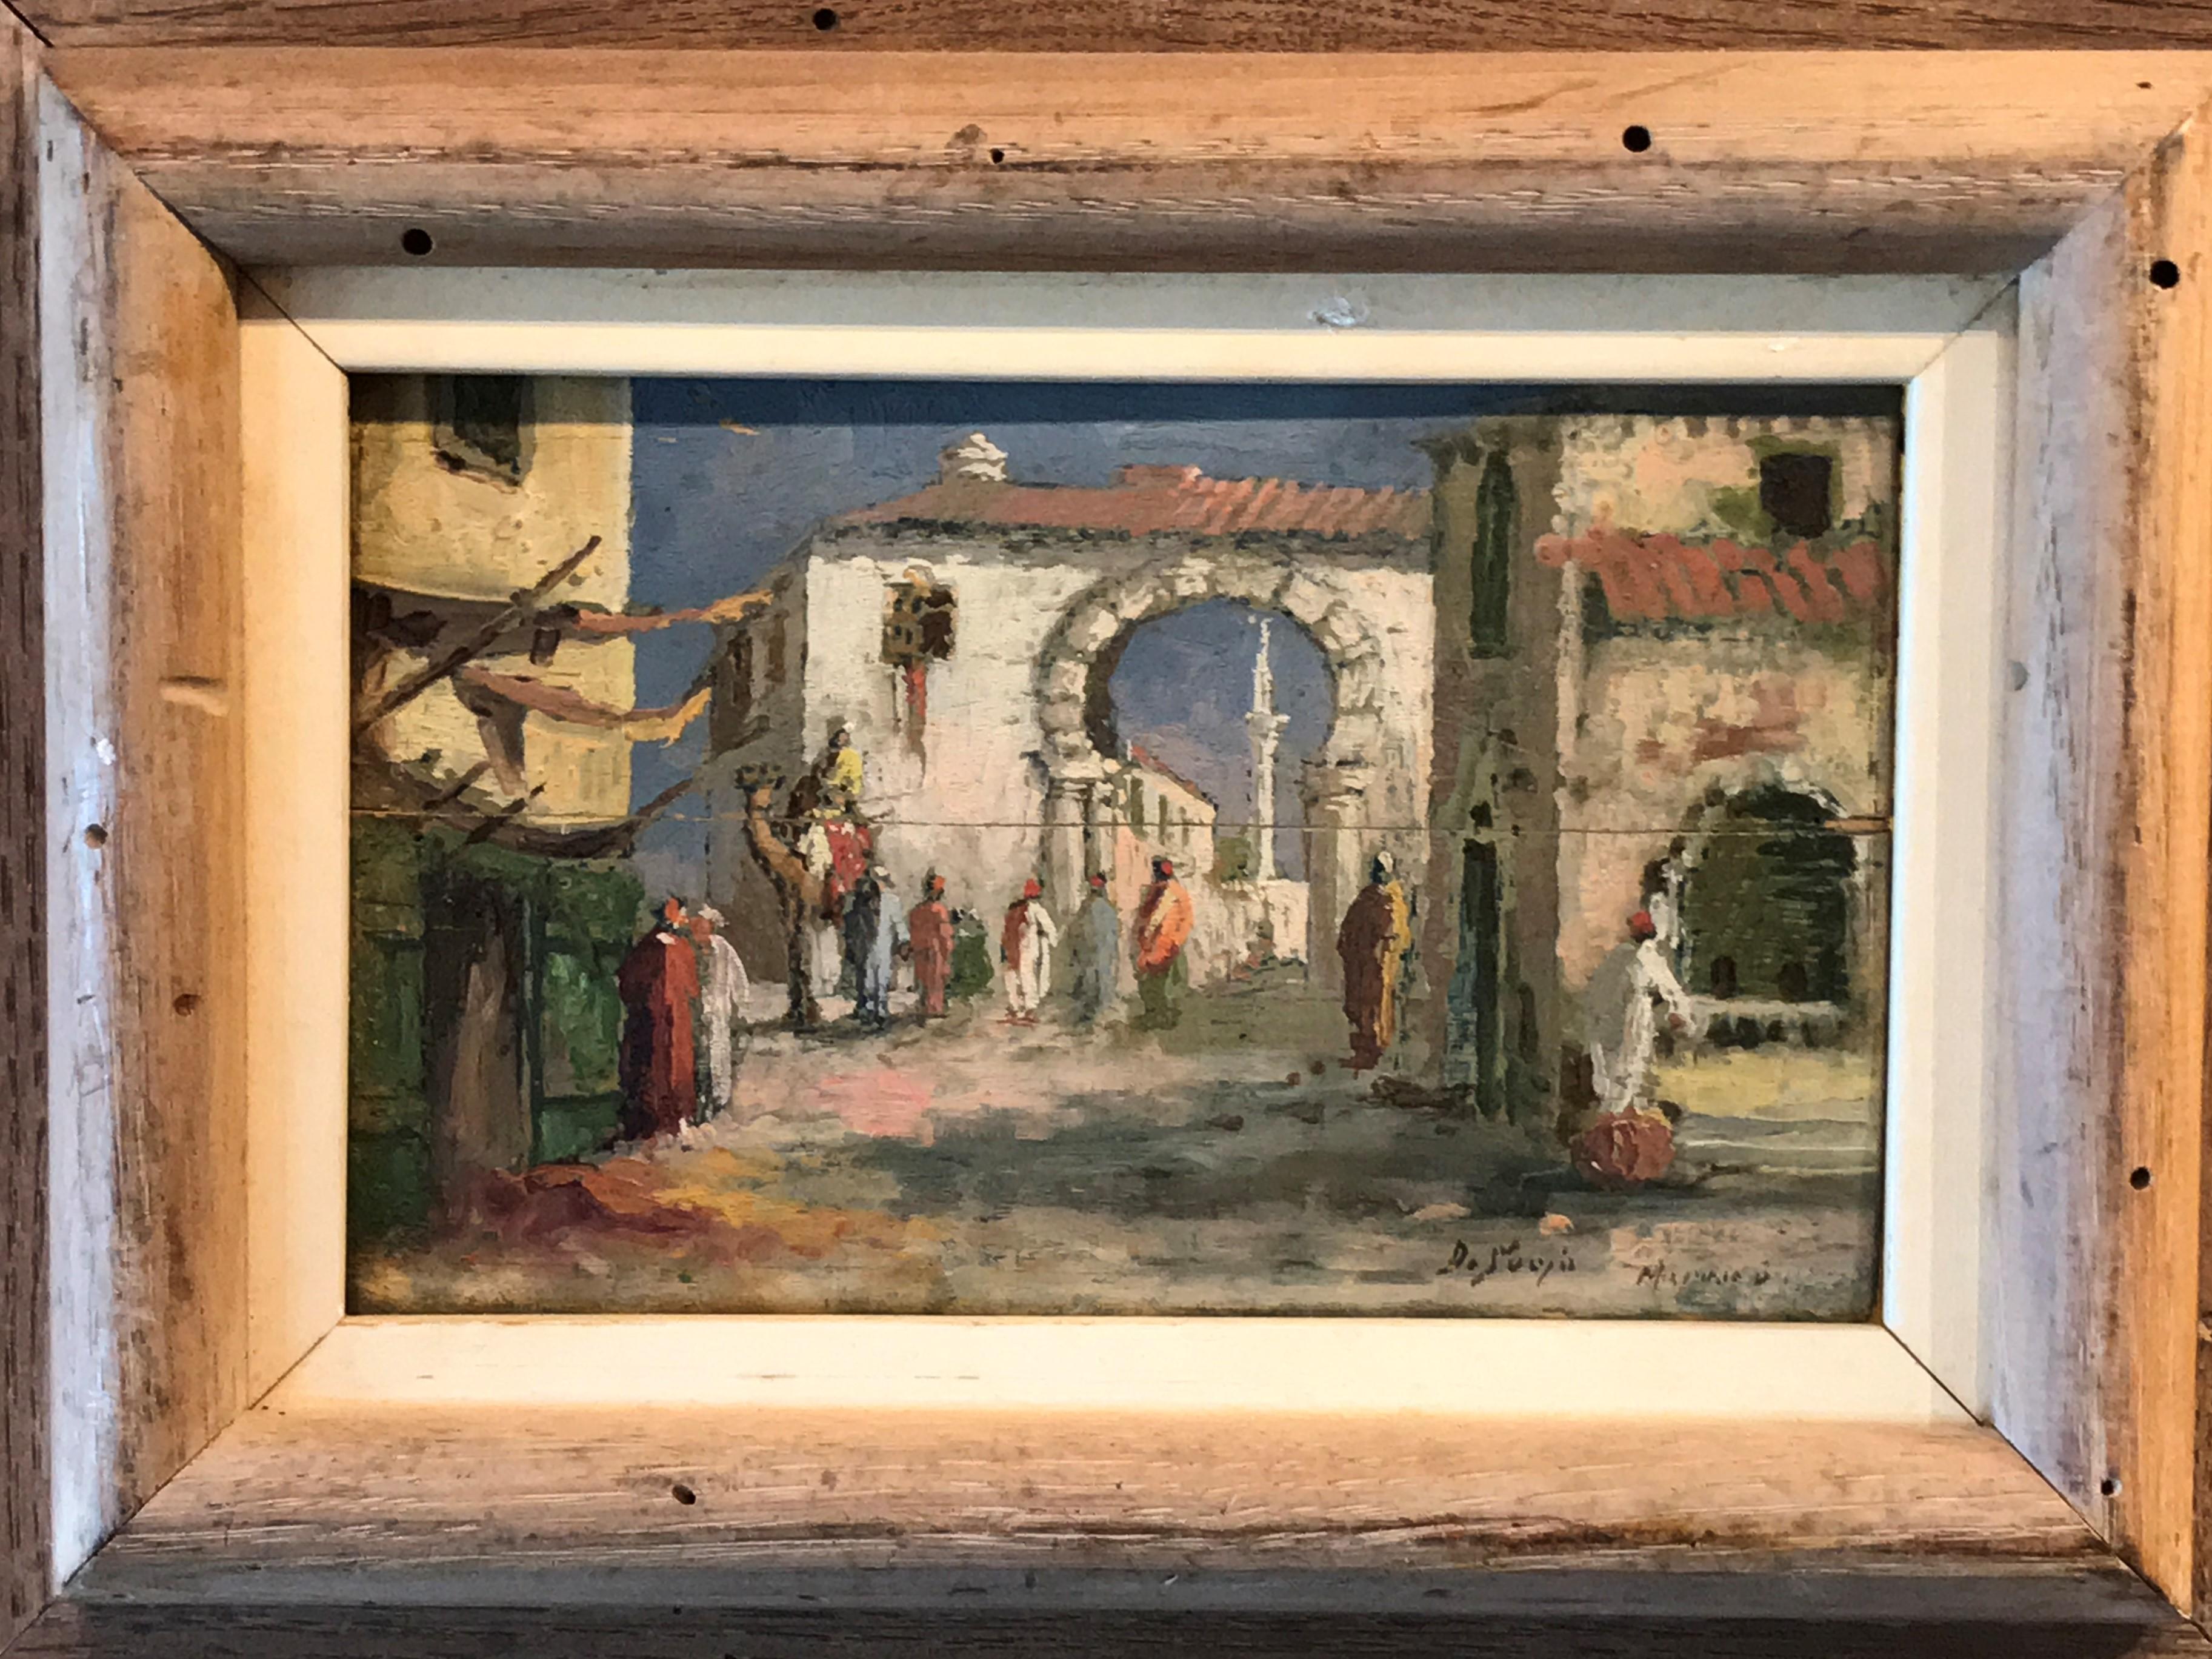 1930s Morocco, Marrakech Street Scene, Framed Orientalist Oil on Wood Painting 2